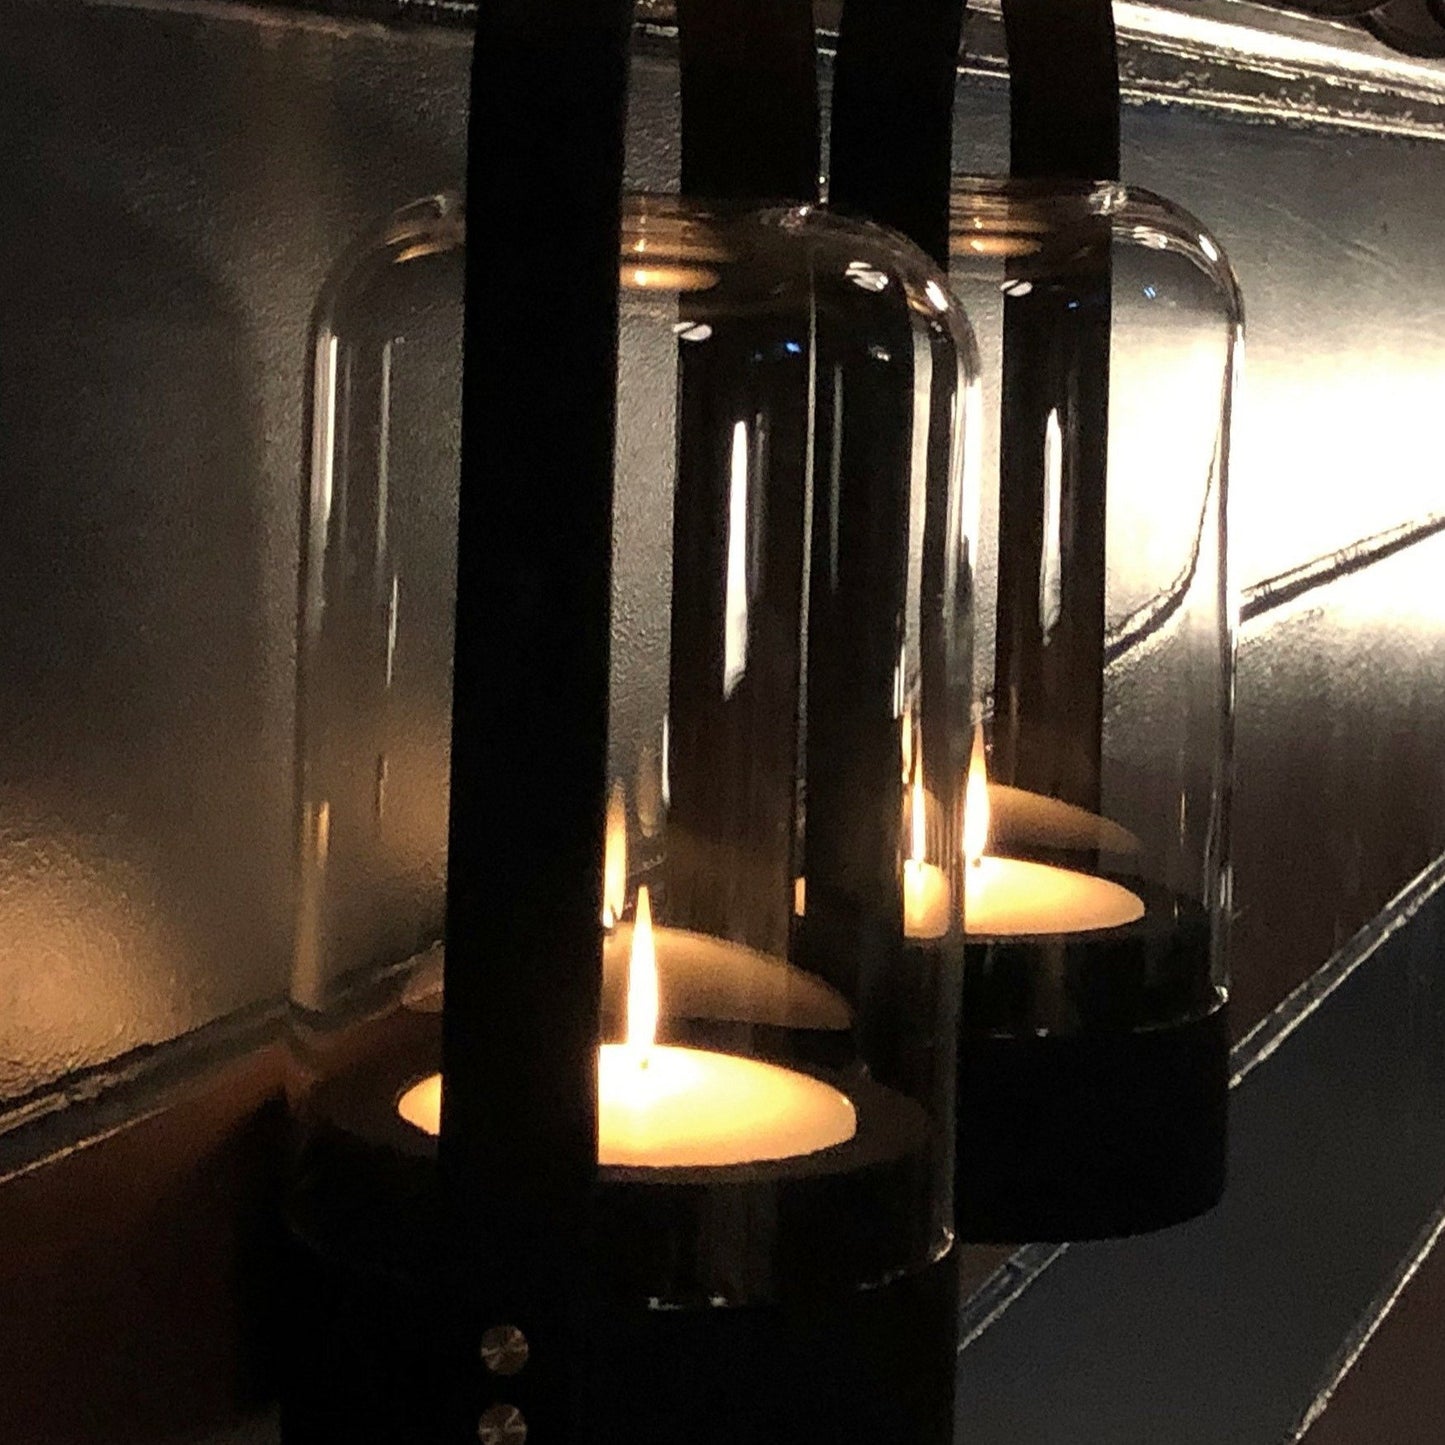 Le Klint Candlelight Rechargeable LED Lantern